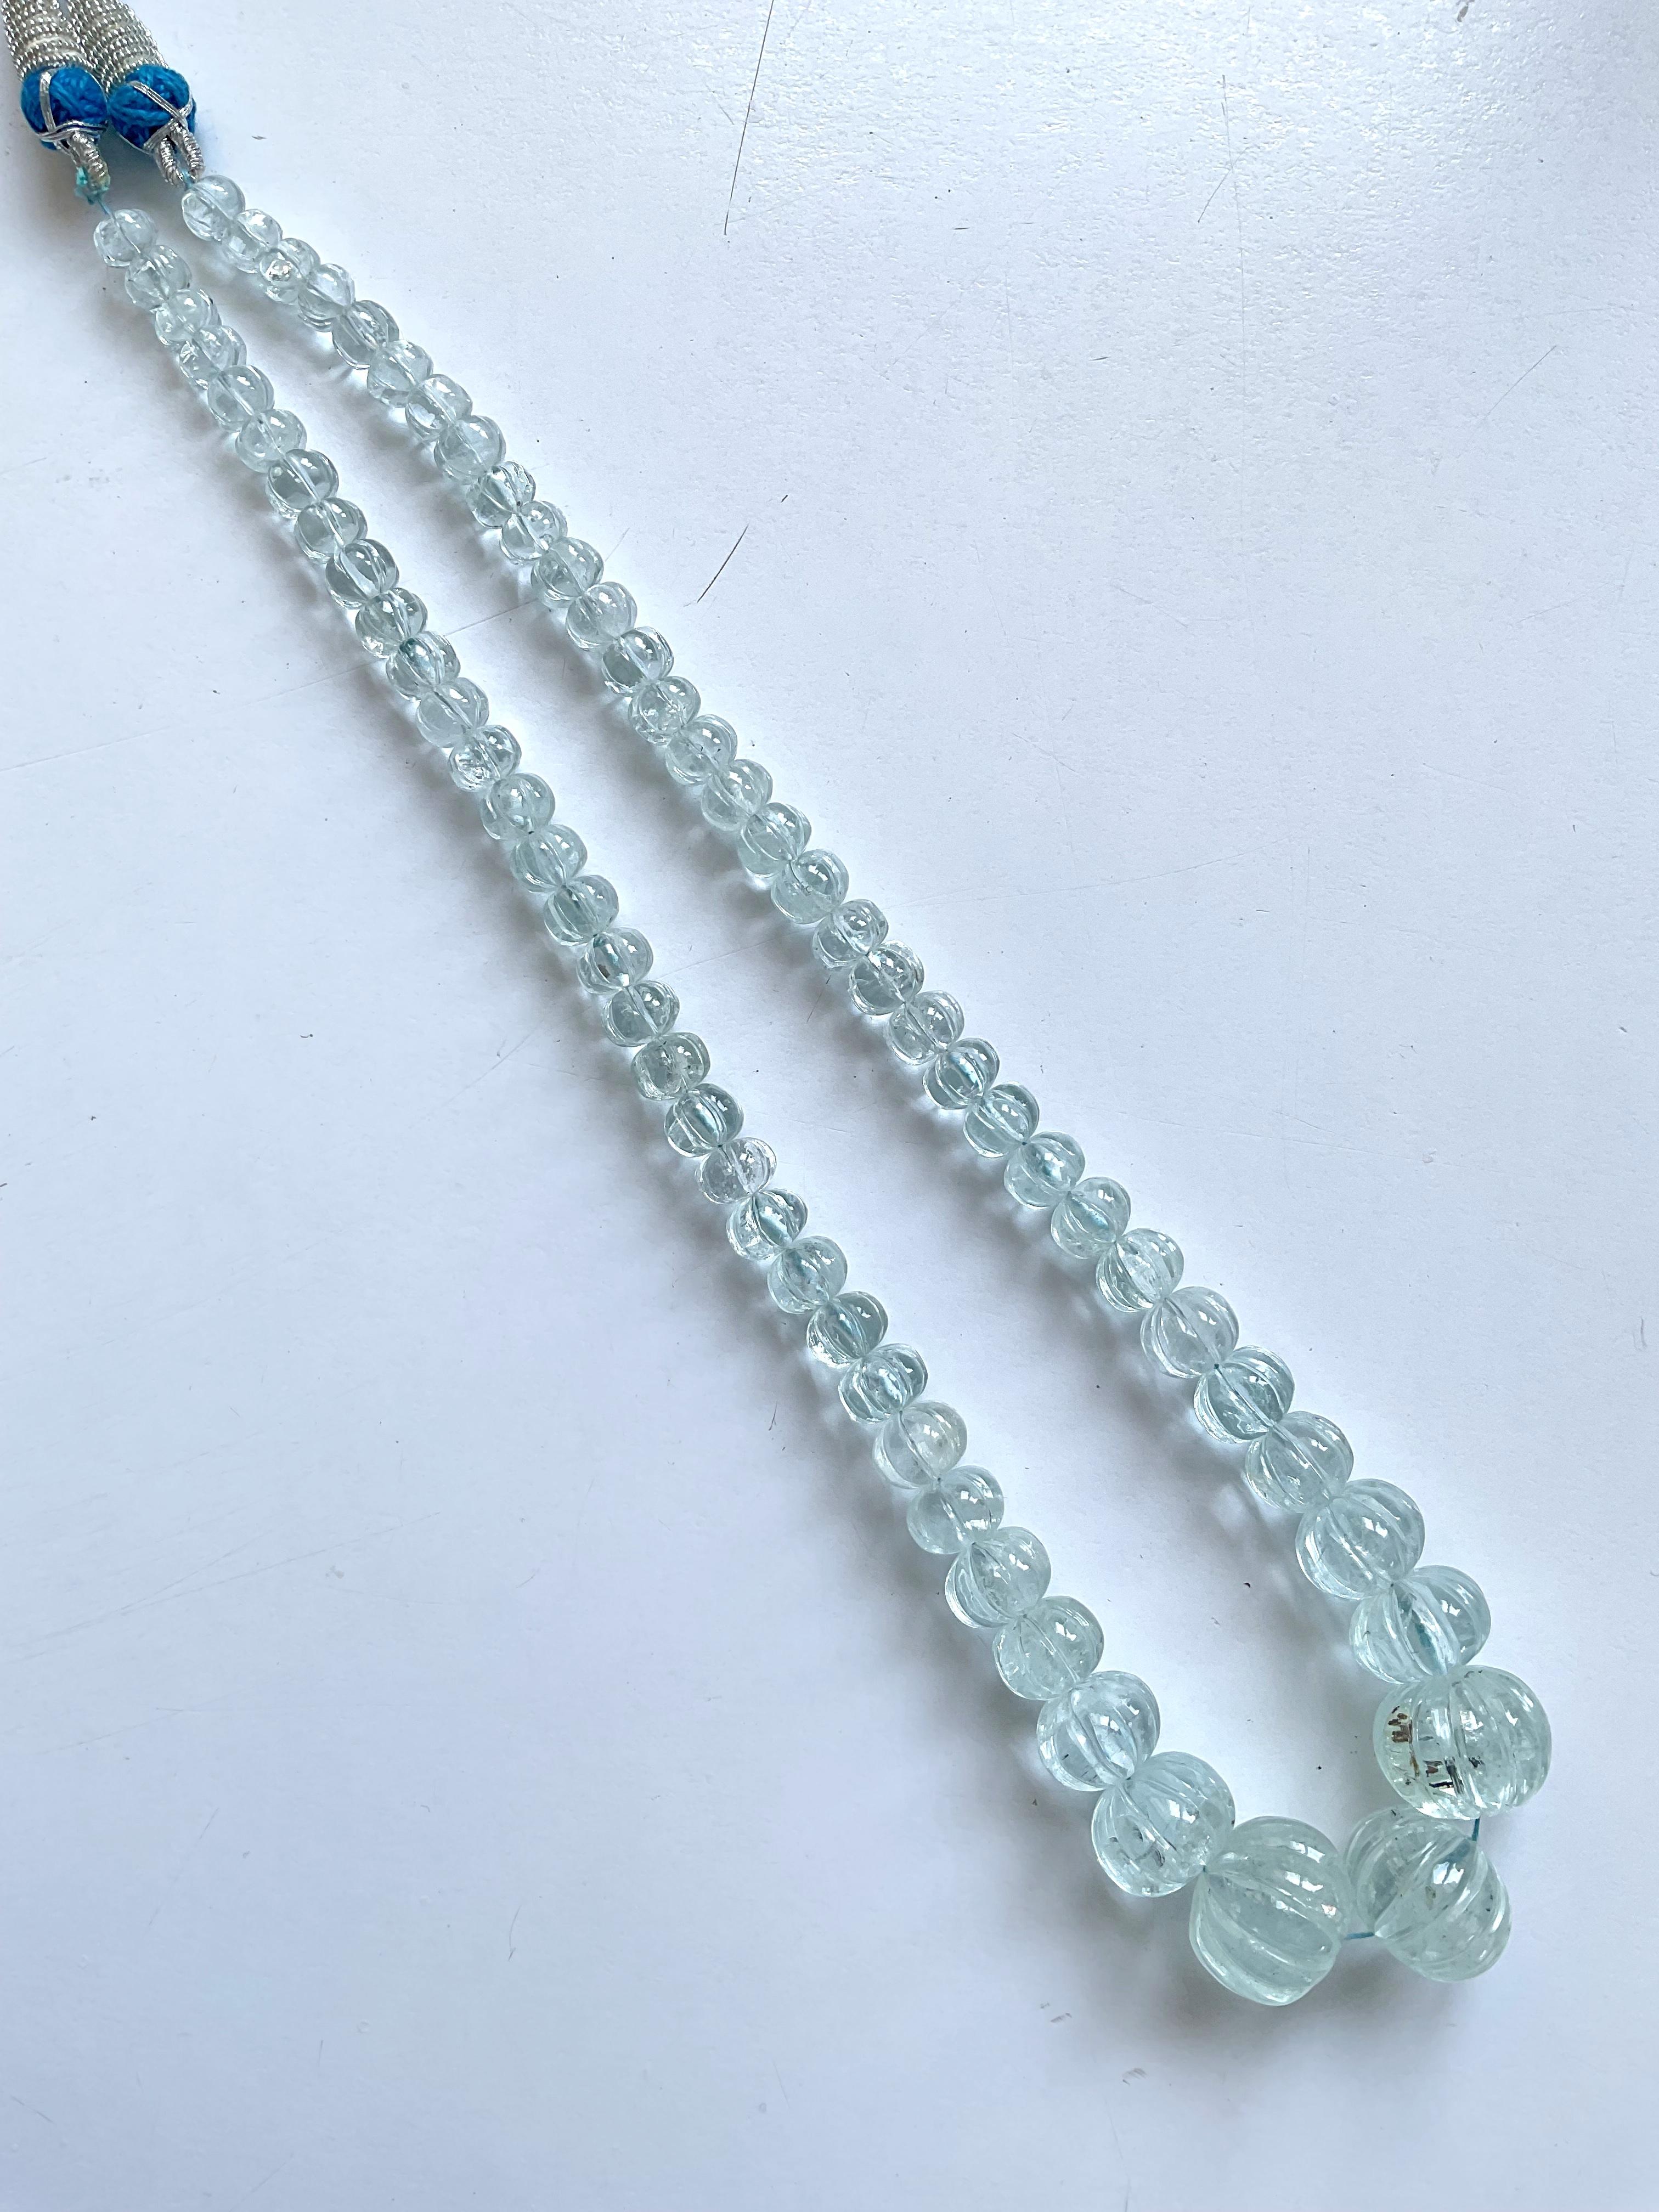 327.80 Carats Aquamarine Carved Melon Beads Necklace Natural Gemstone

gemstone - Aquamarine 
weight - 327.80 carats
size - 7 to 18 mm
quantity - 1 Strand